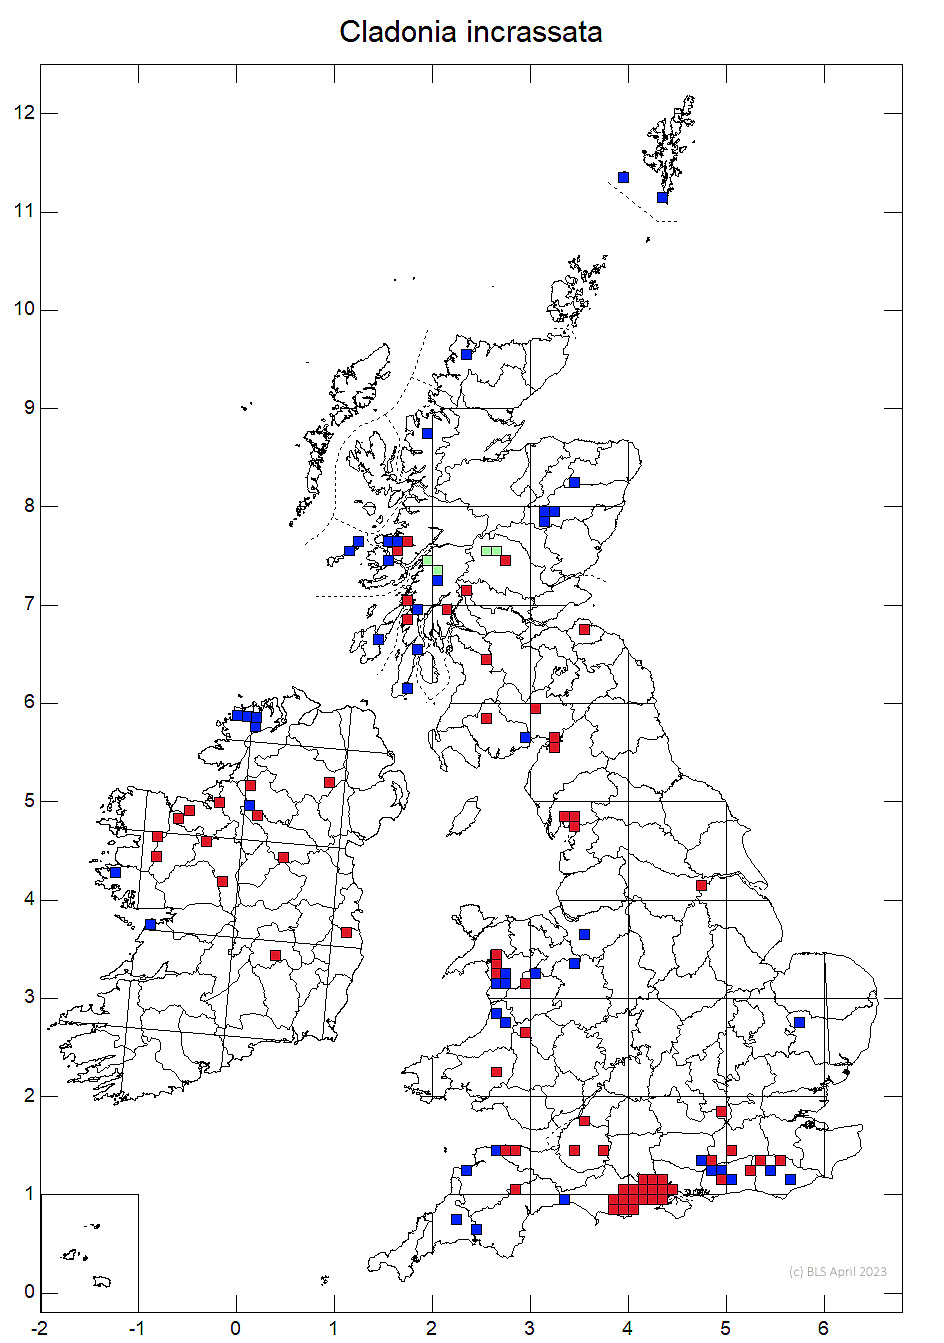 Cladonia incrassata 10km sq distribution map